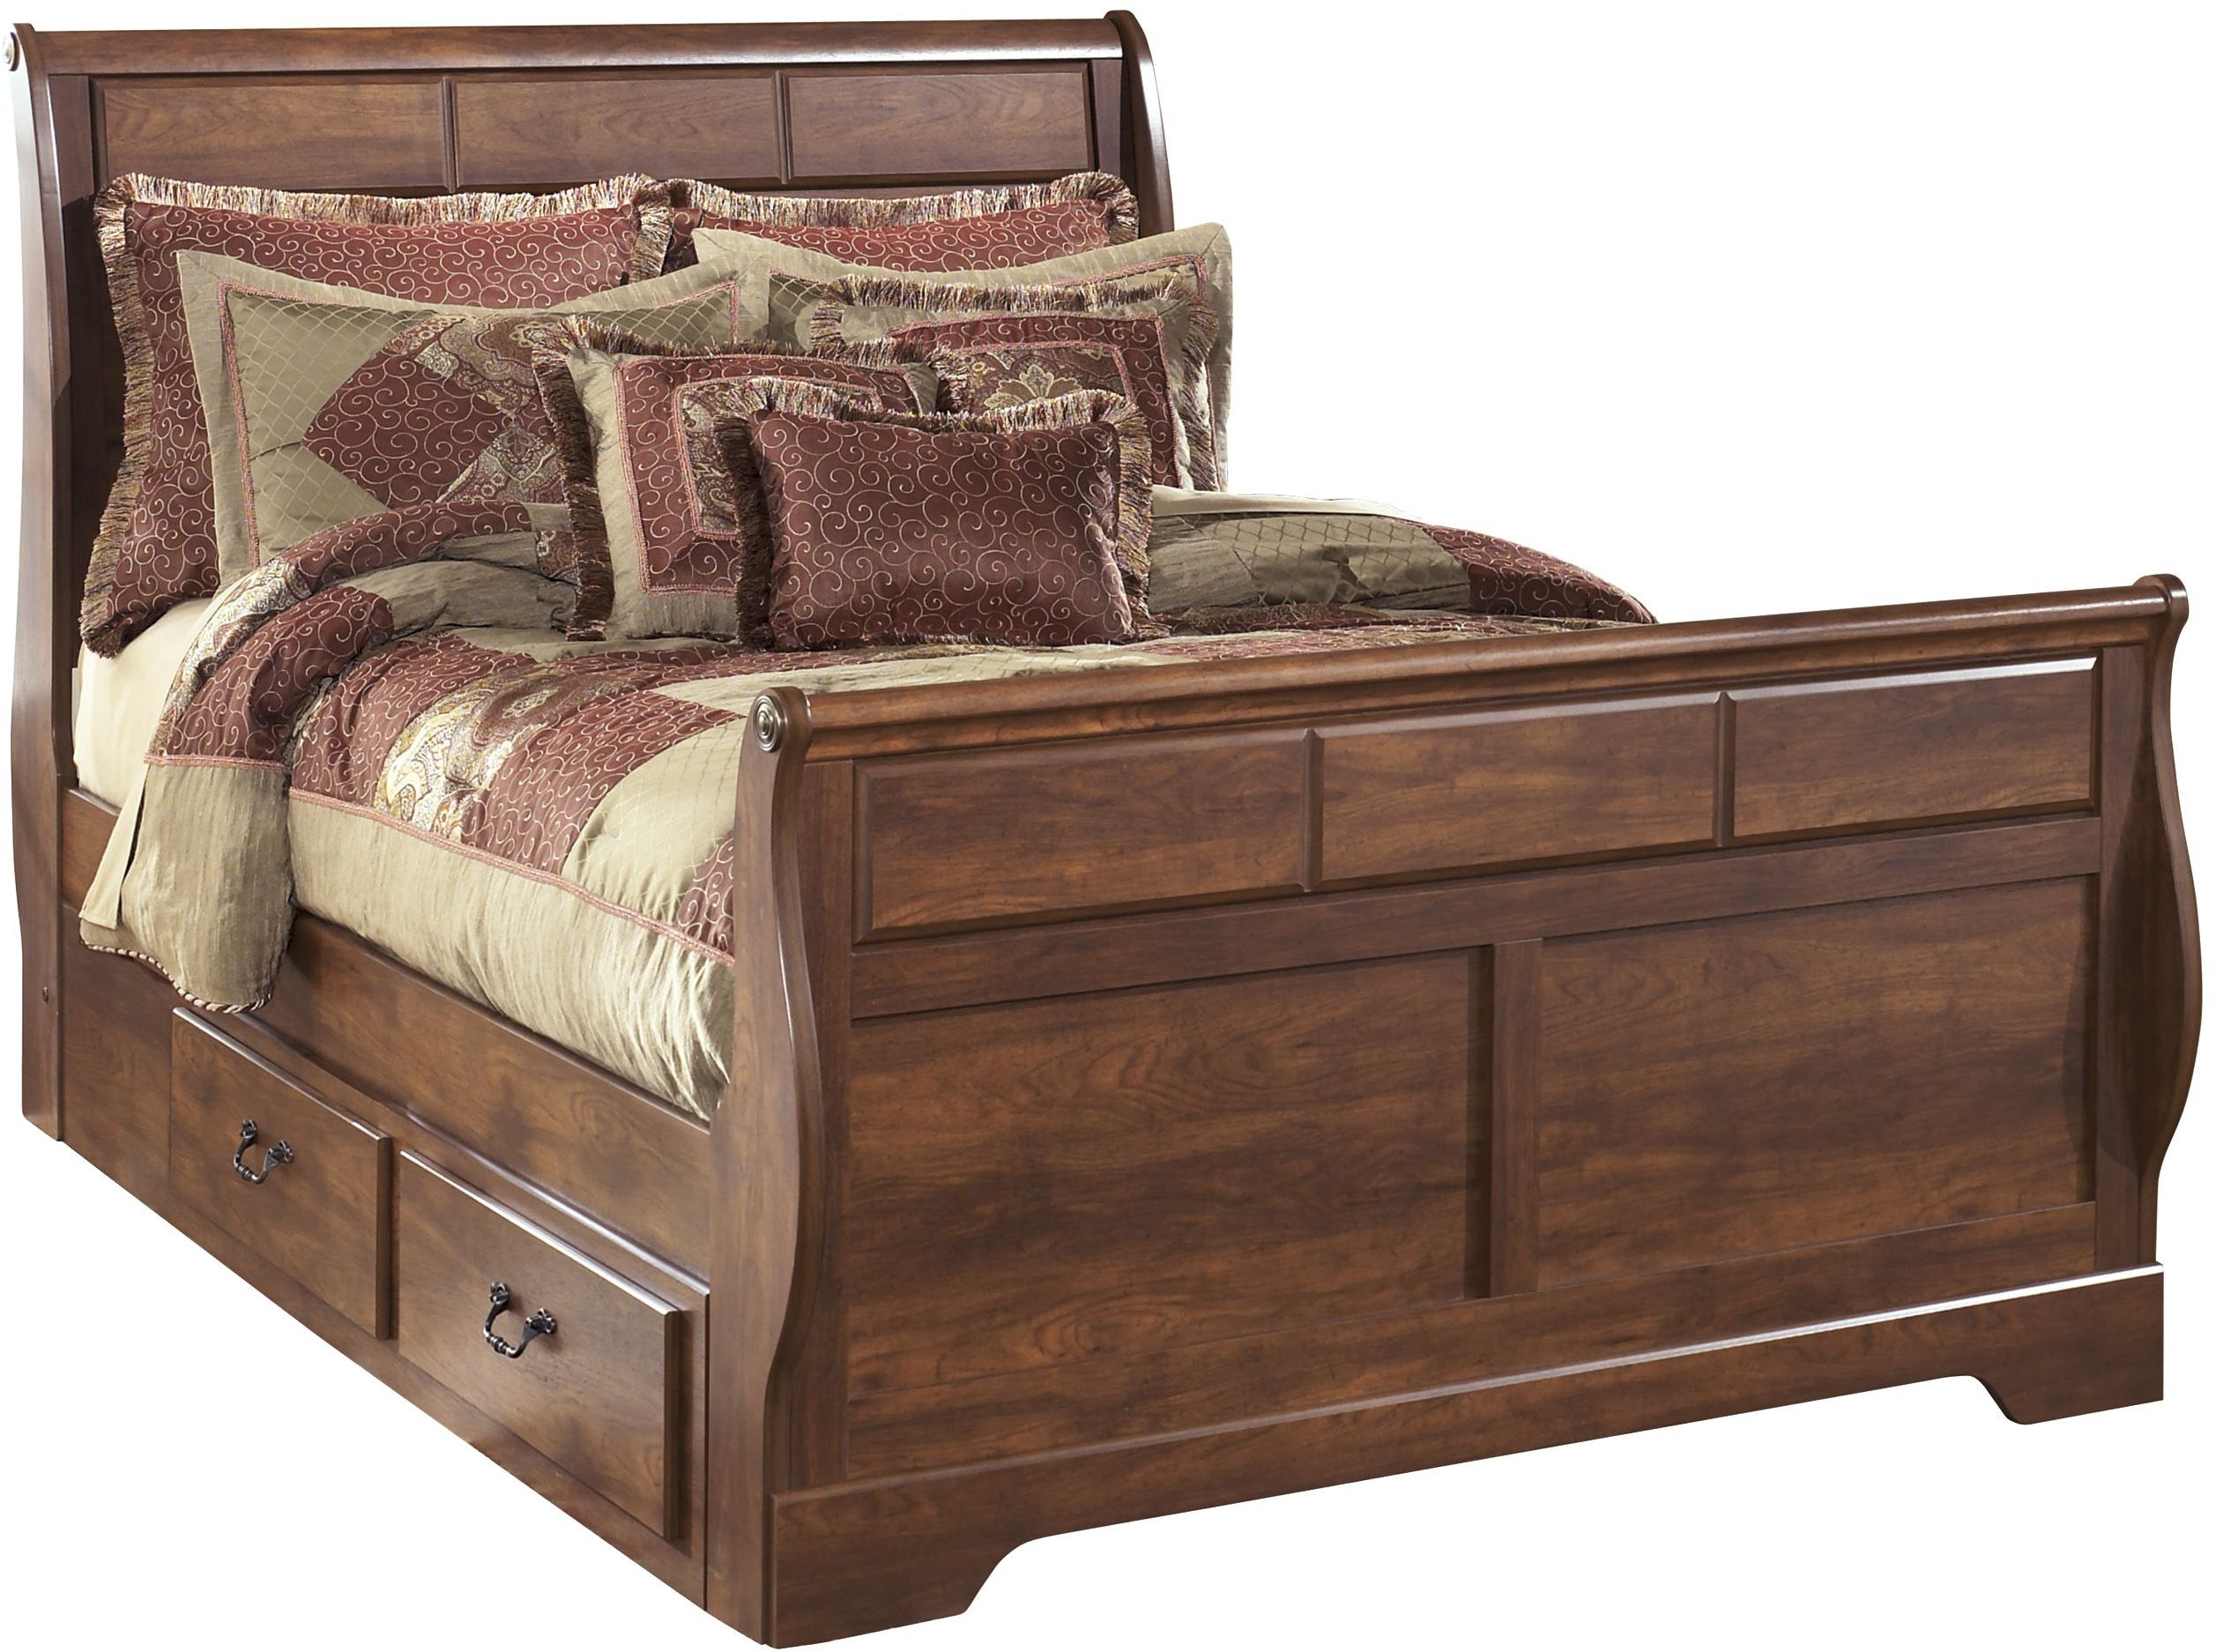 Timberline Warm Brown Queen Sleigh Bed With Under Bed Storage